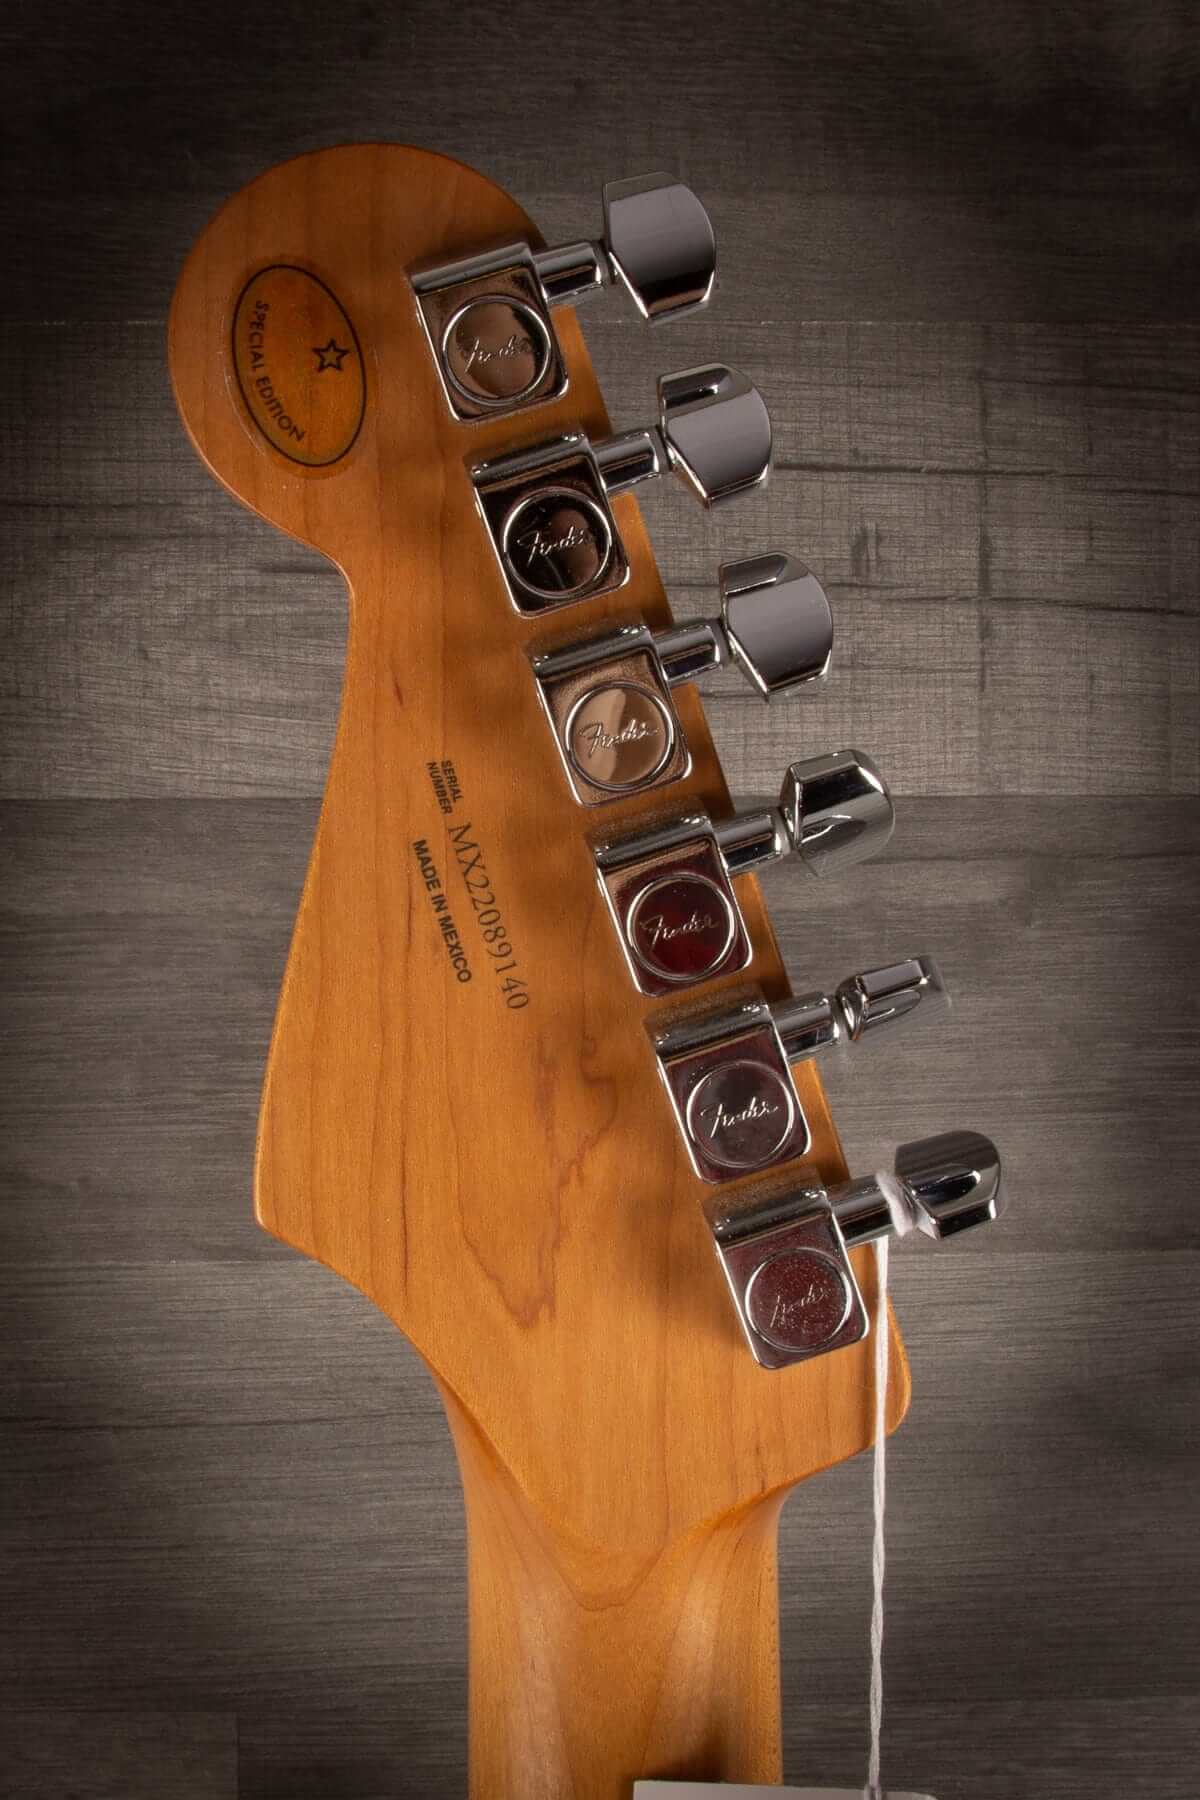 Fender Electric Guitar B-Stock Fender Player Series Stratocaster, HSS FSR Ltd Edition - Shell pink / Roasted maple neck